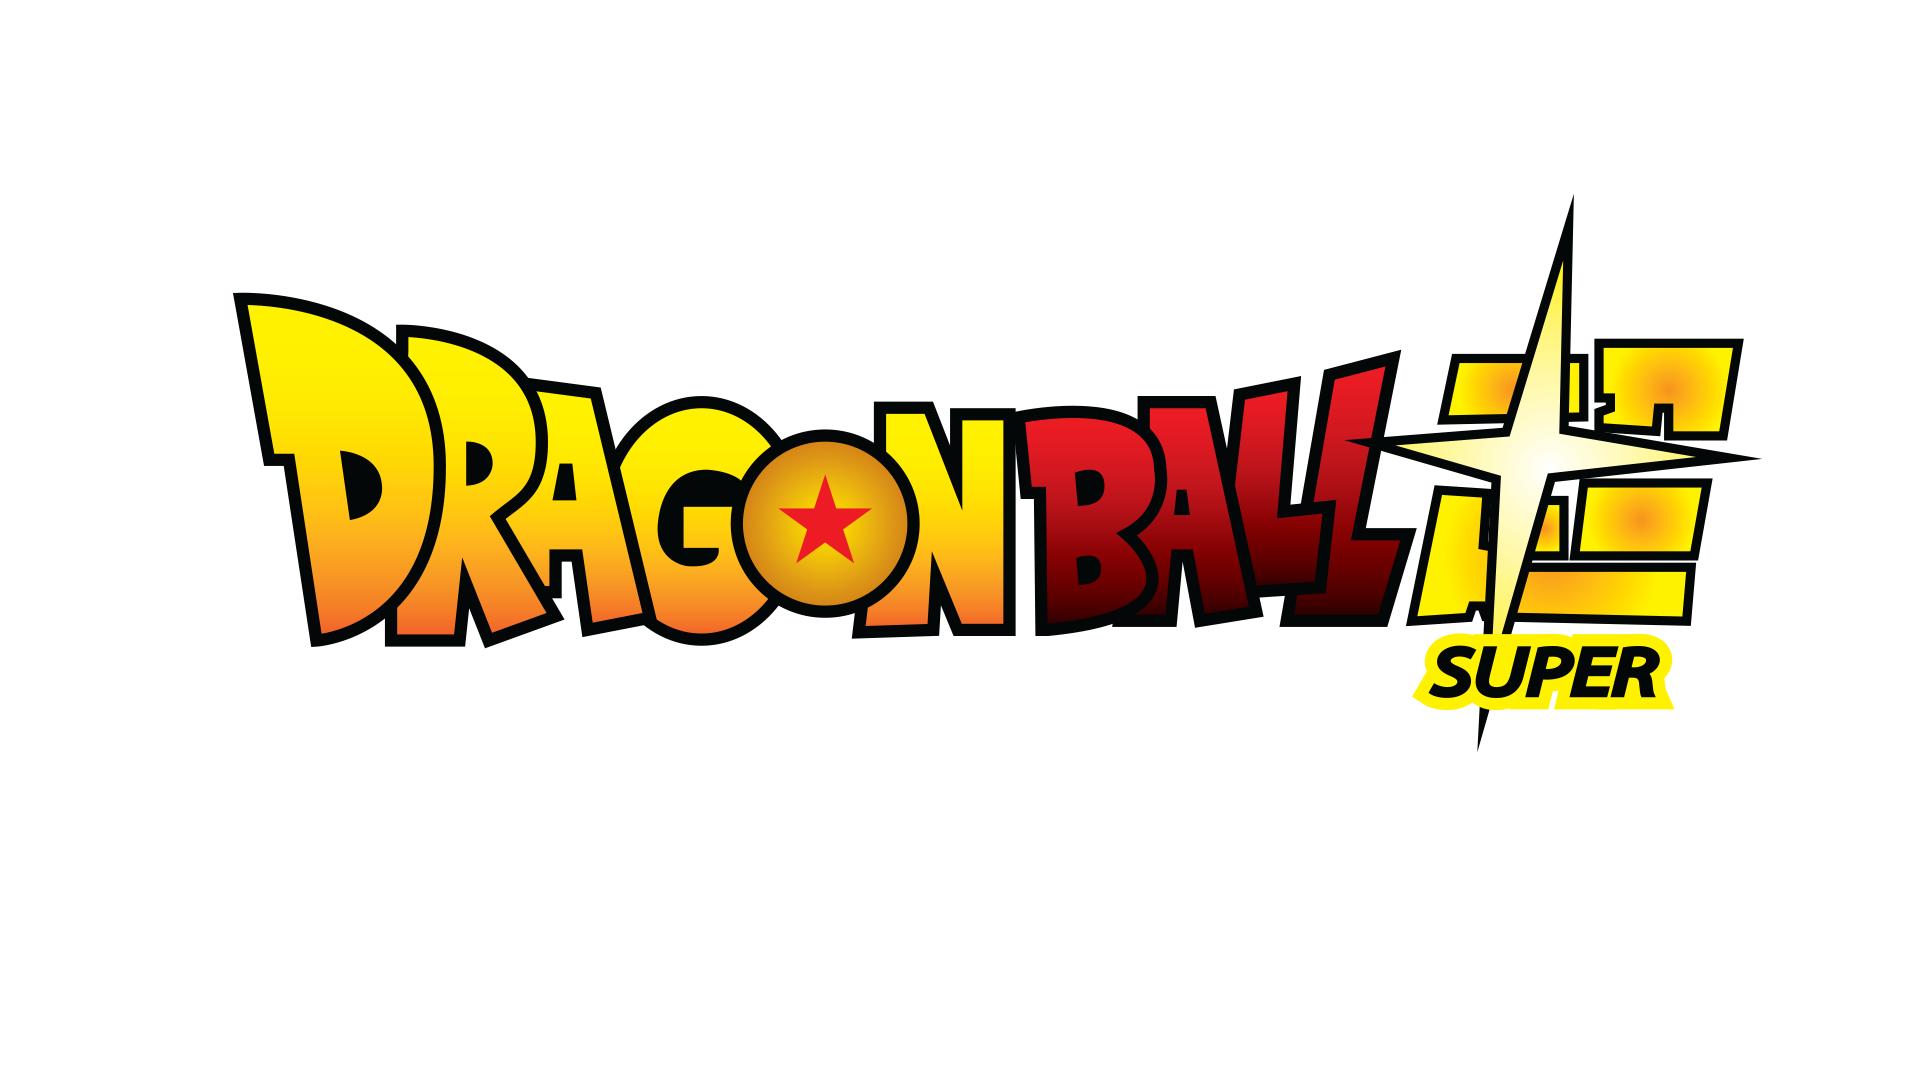 Dragon Ball Super Logo - I recreated the Dragon Ball Super logo in Illustrator to the best